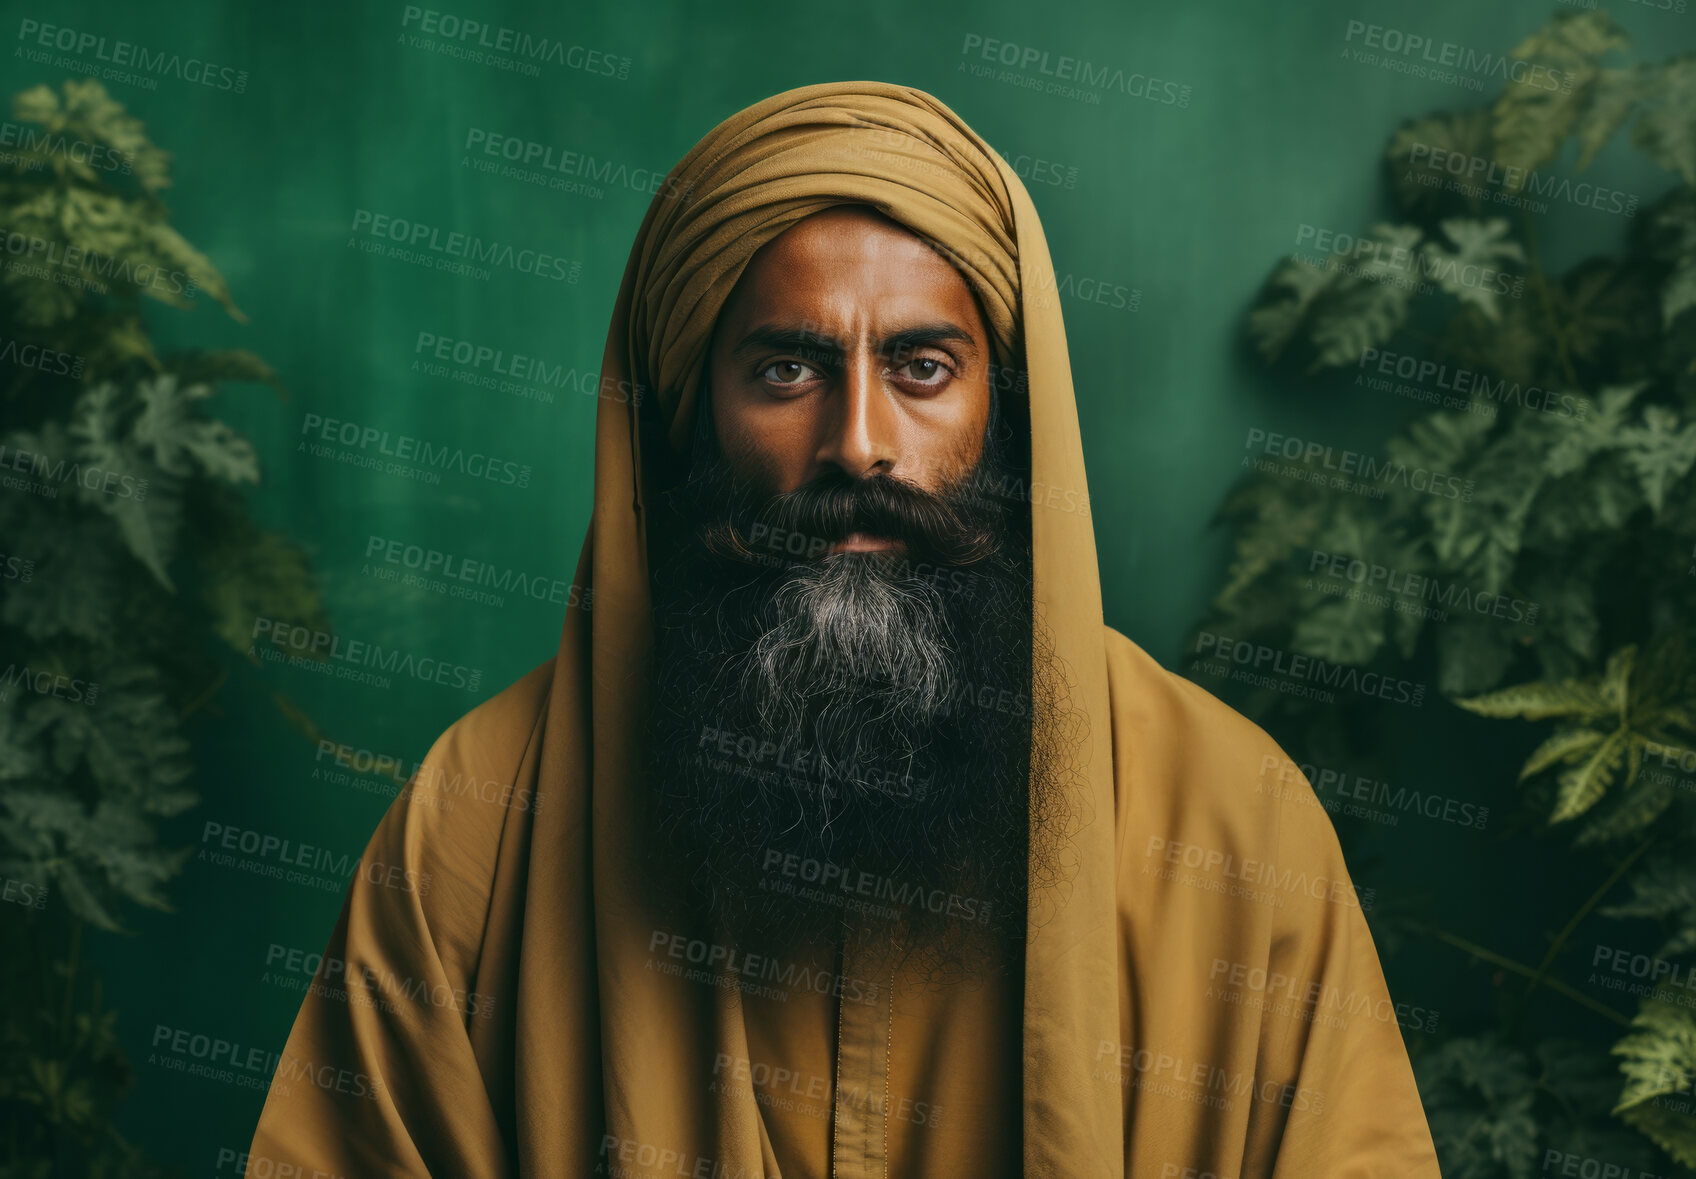 Buy stock photo Sikh Indian man wearing traditional yellow turban. Studio portrait. Religion concept.